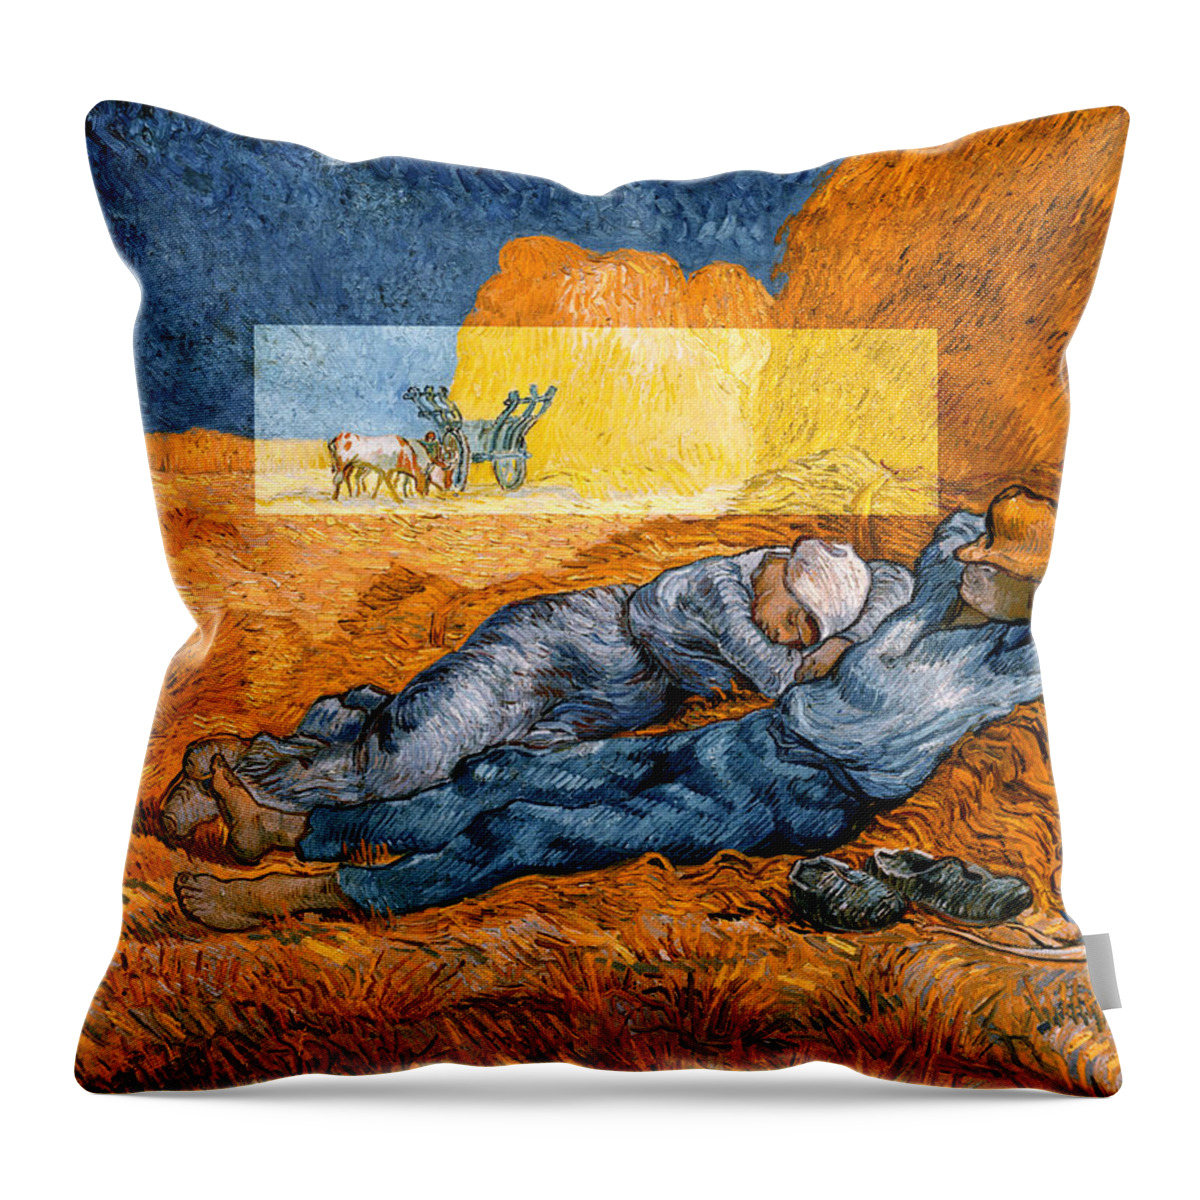 Postmodernism Throw Pillow featuring the digital art Layered 14 van Gogh by David Bridburg